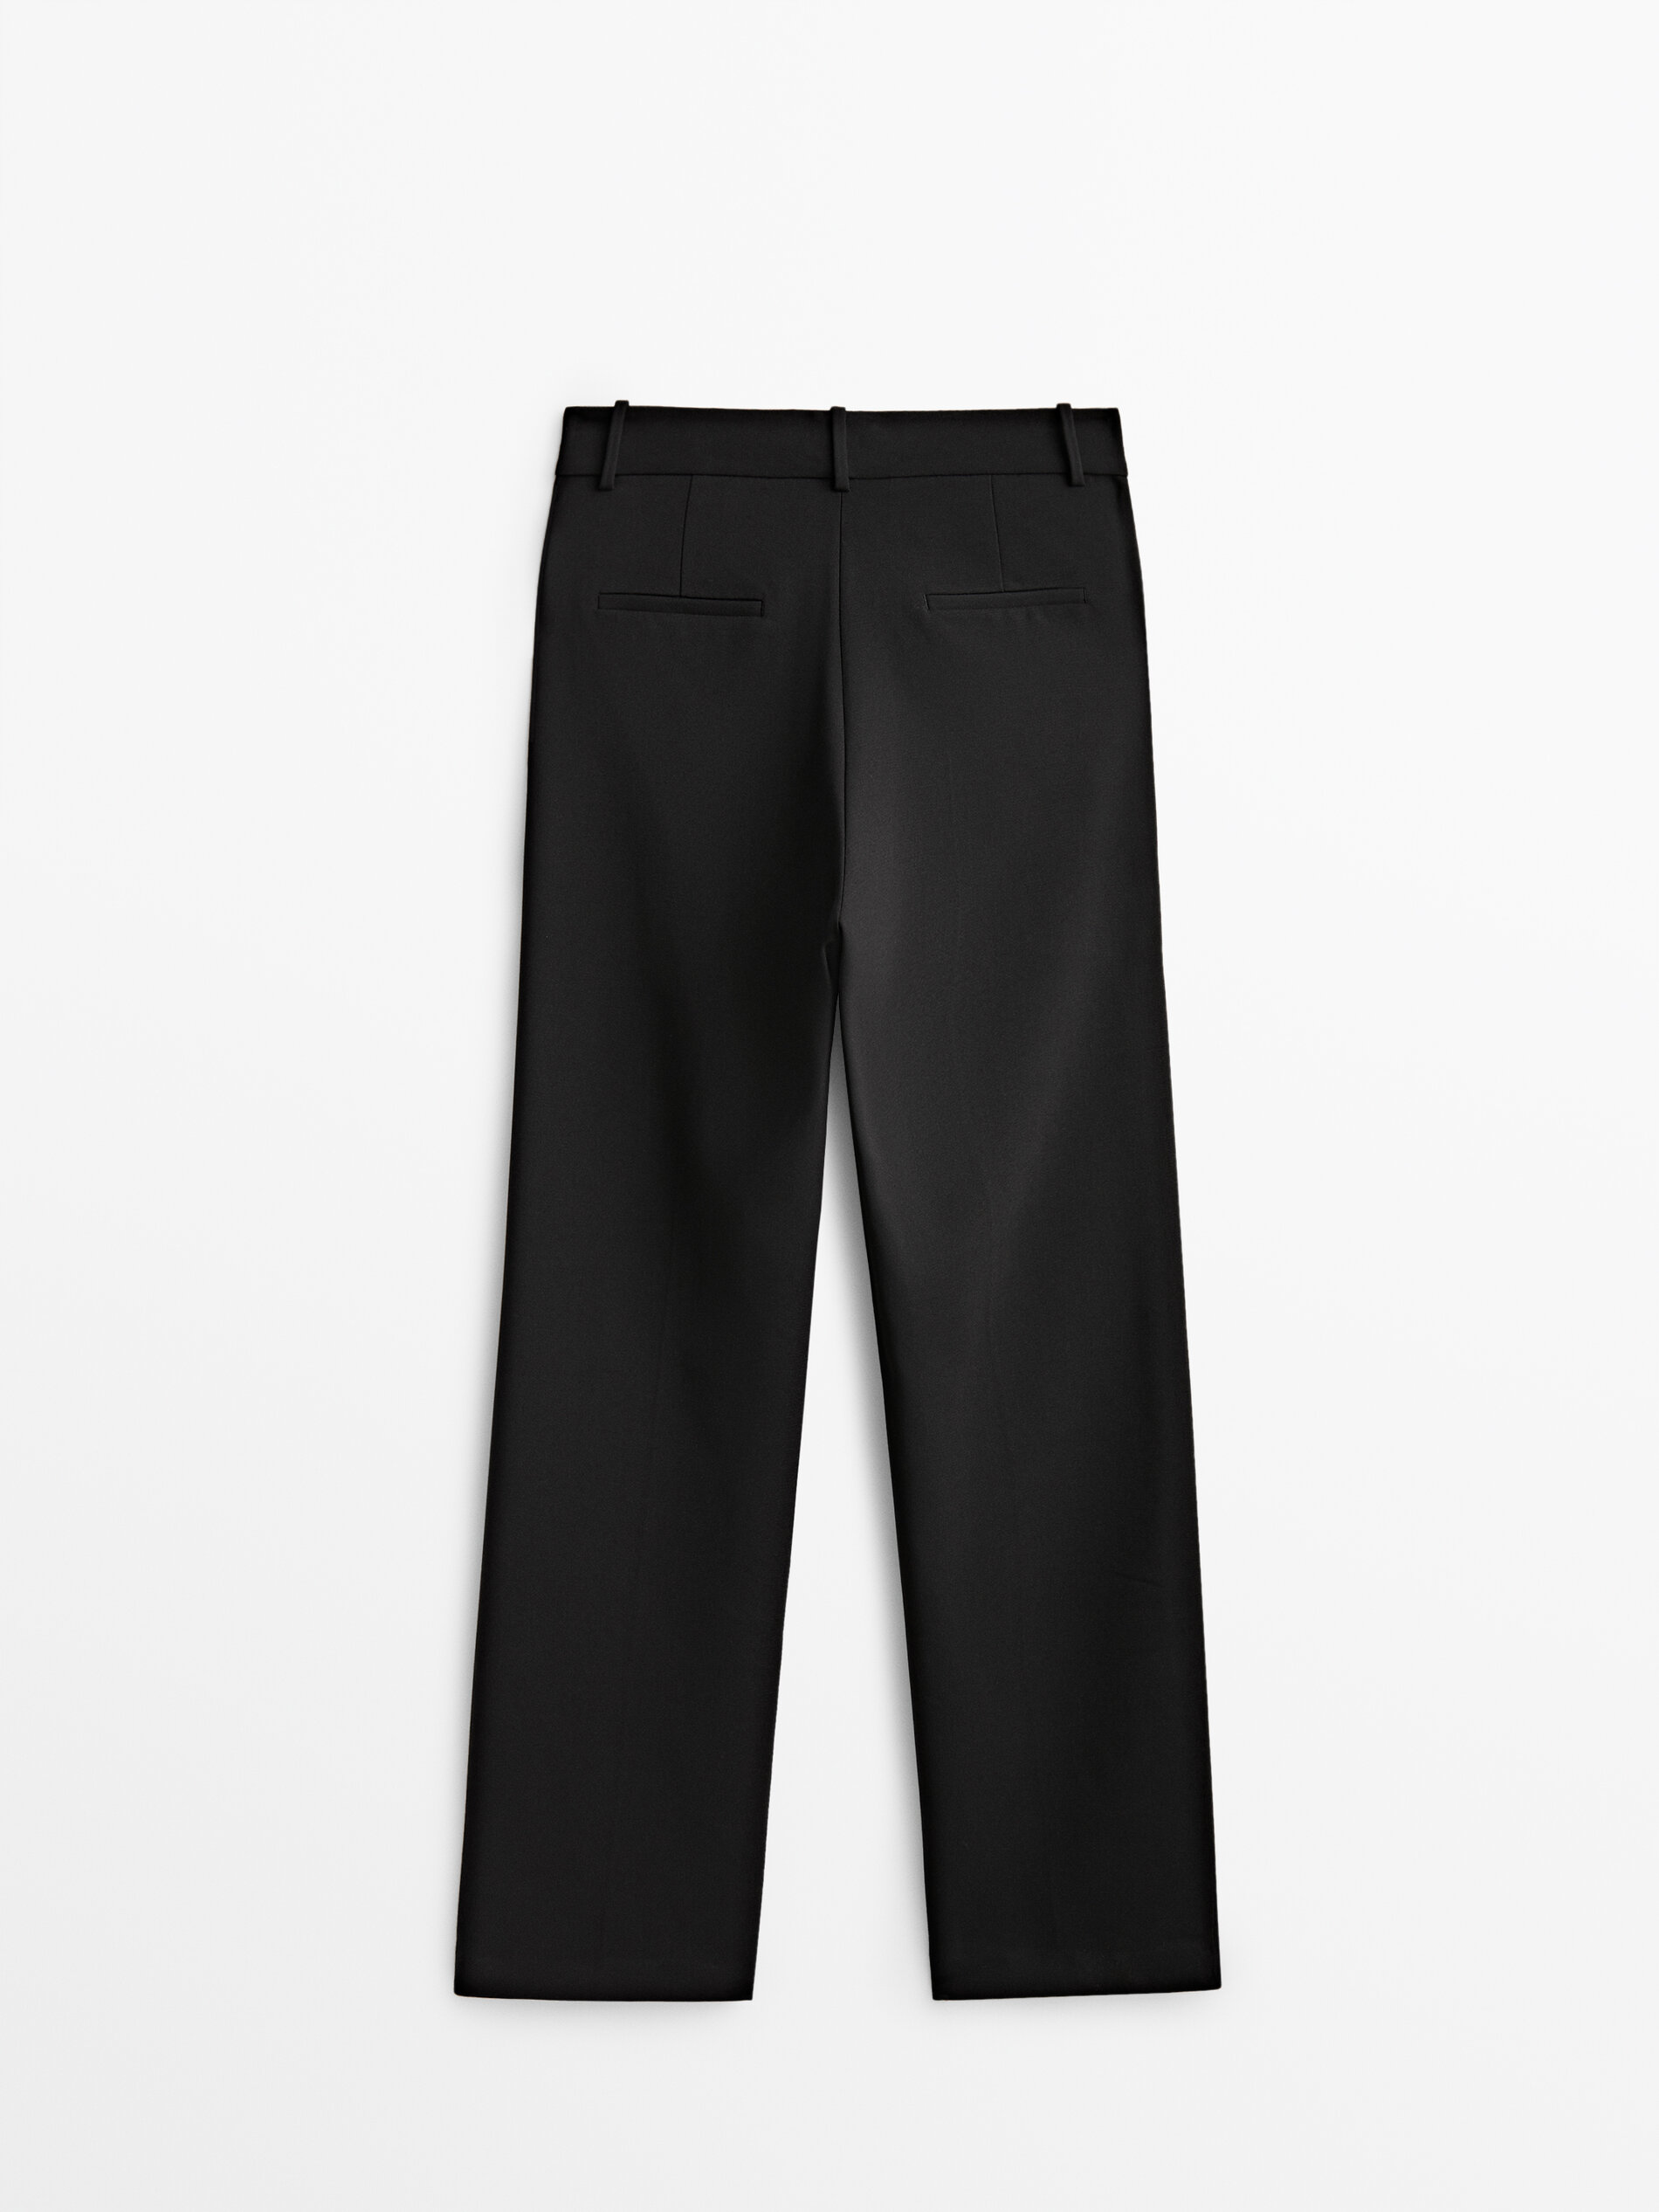 Massimo Dutti Black Suit Trousers - Big Apple Buddy